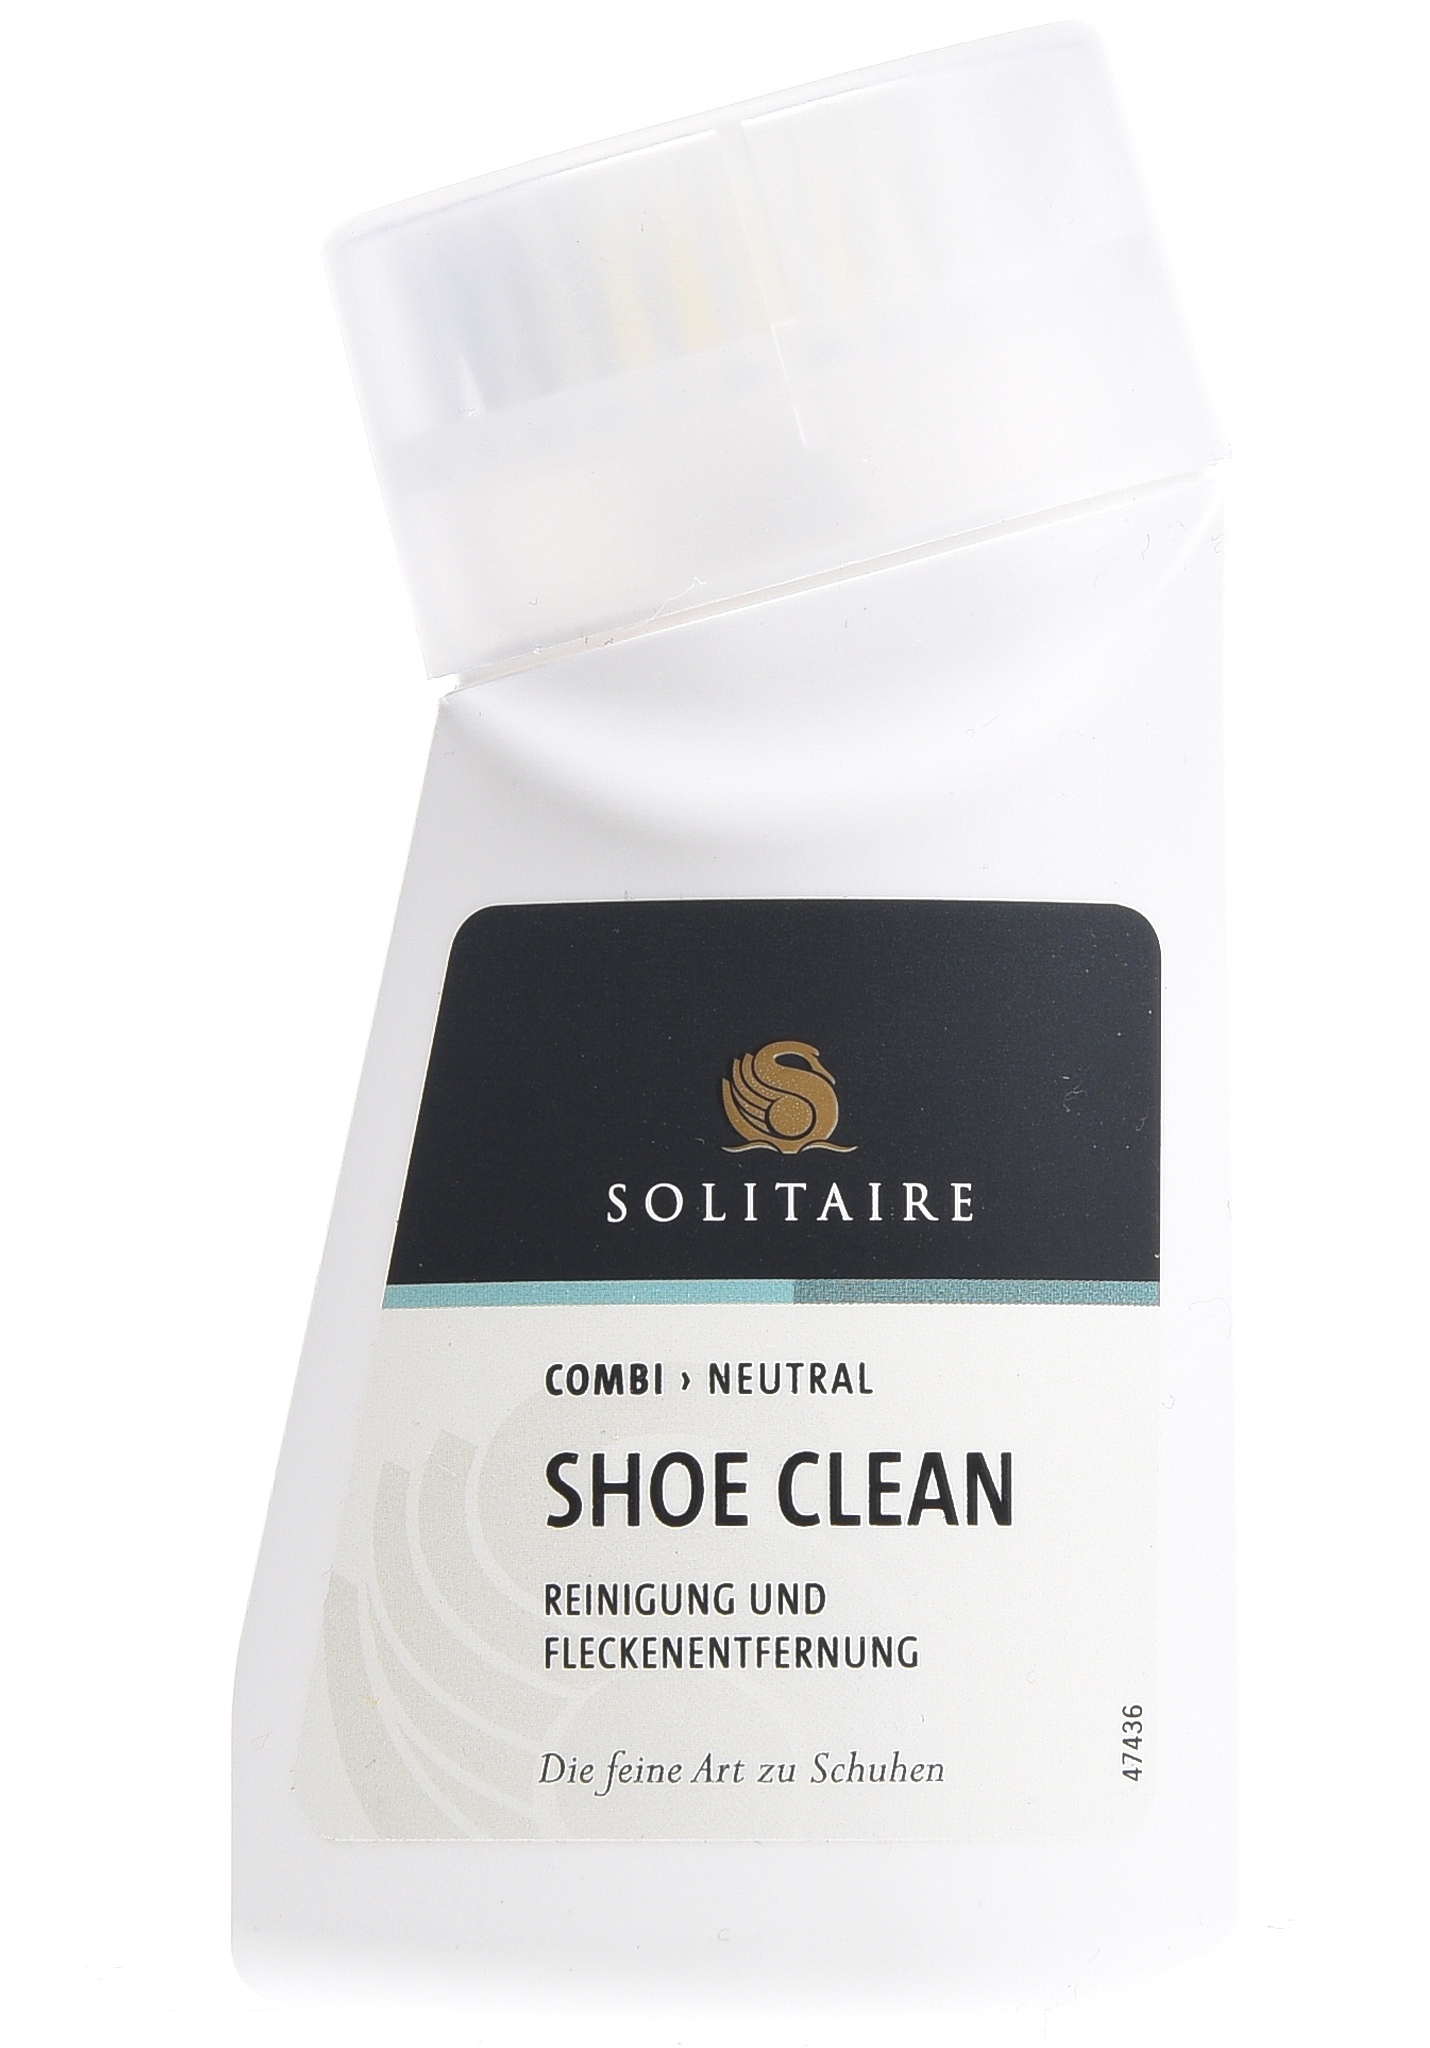 Solitaire Shoe Clean 75ml Schuhpflege